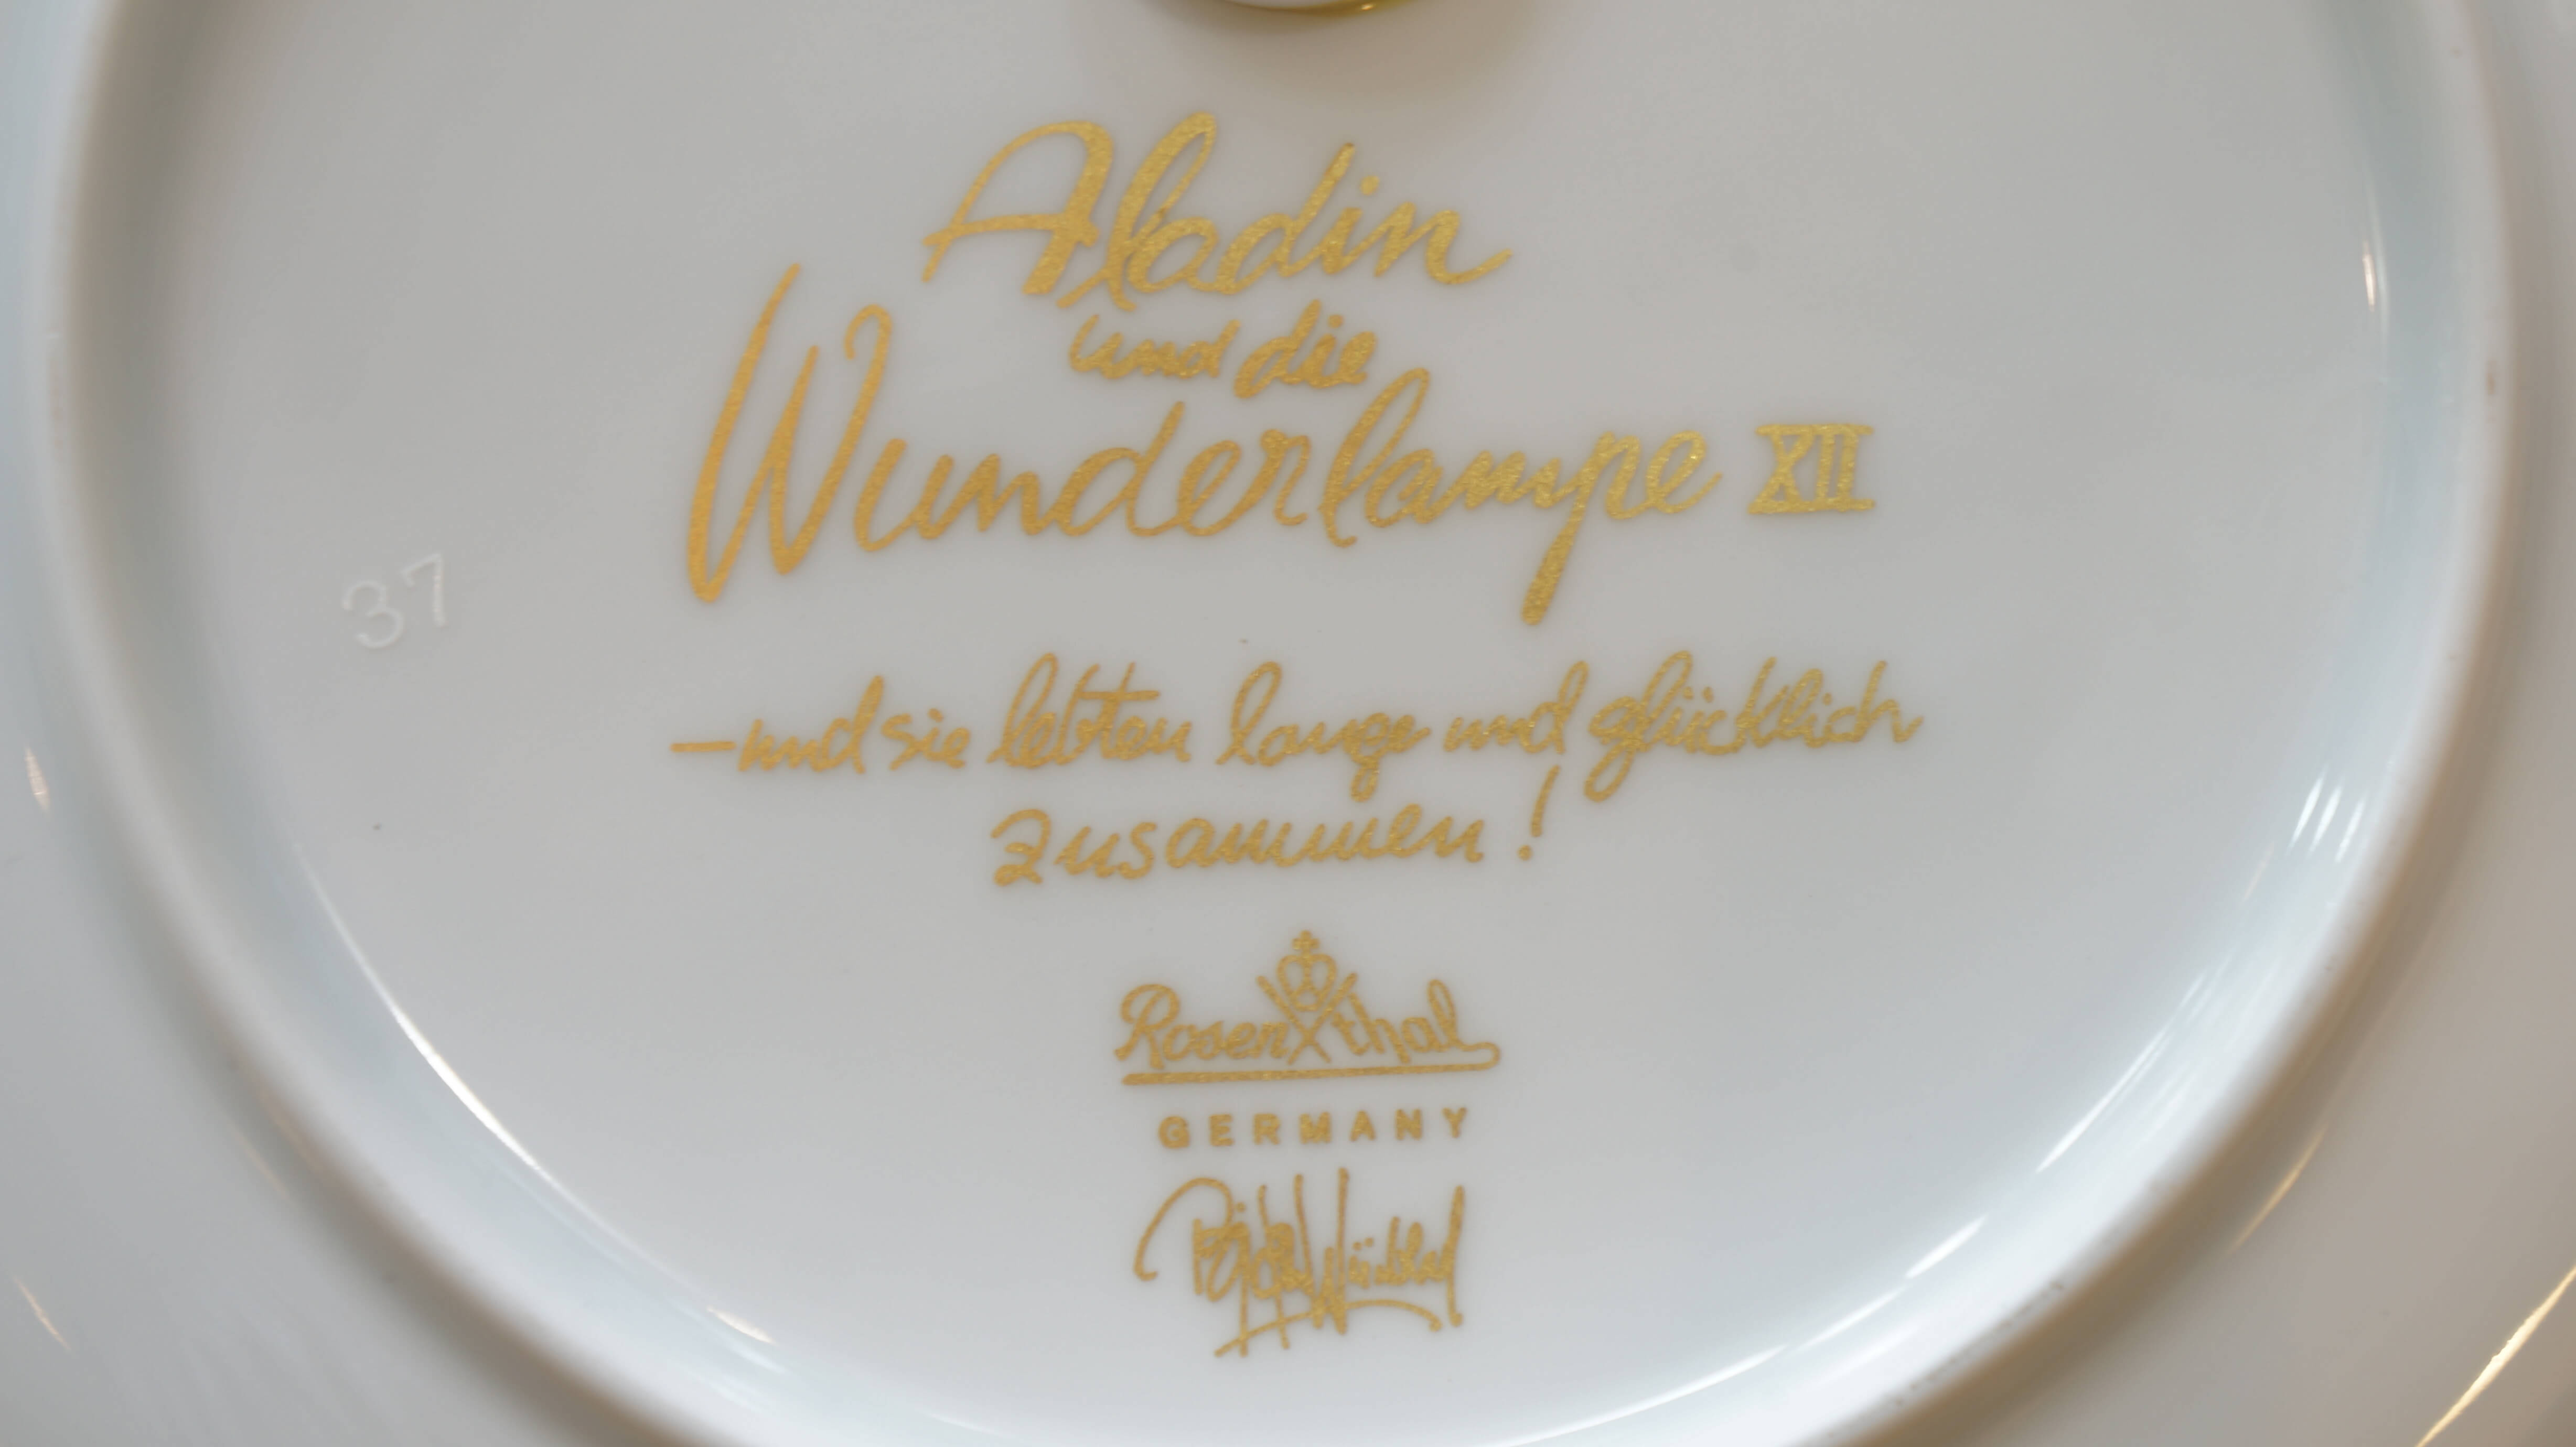 Rosenthal studio-linie "Aladdin und die Wunderlampe" plate No.12 designed by Bjorn Wiinblad/ローゼンタール スタジオライン "千夜一夜物語" プレート No.12 ビョルン・ヴィンブラッド デザイン